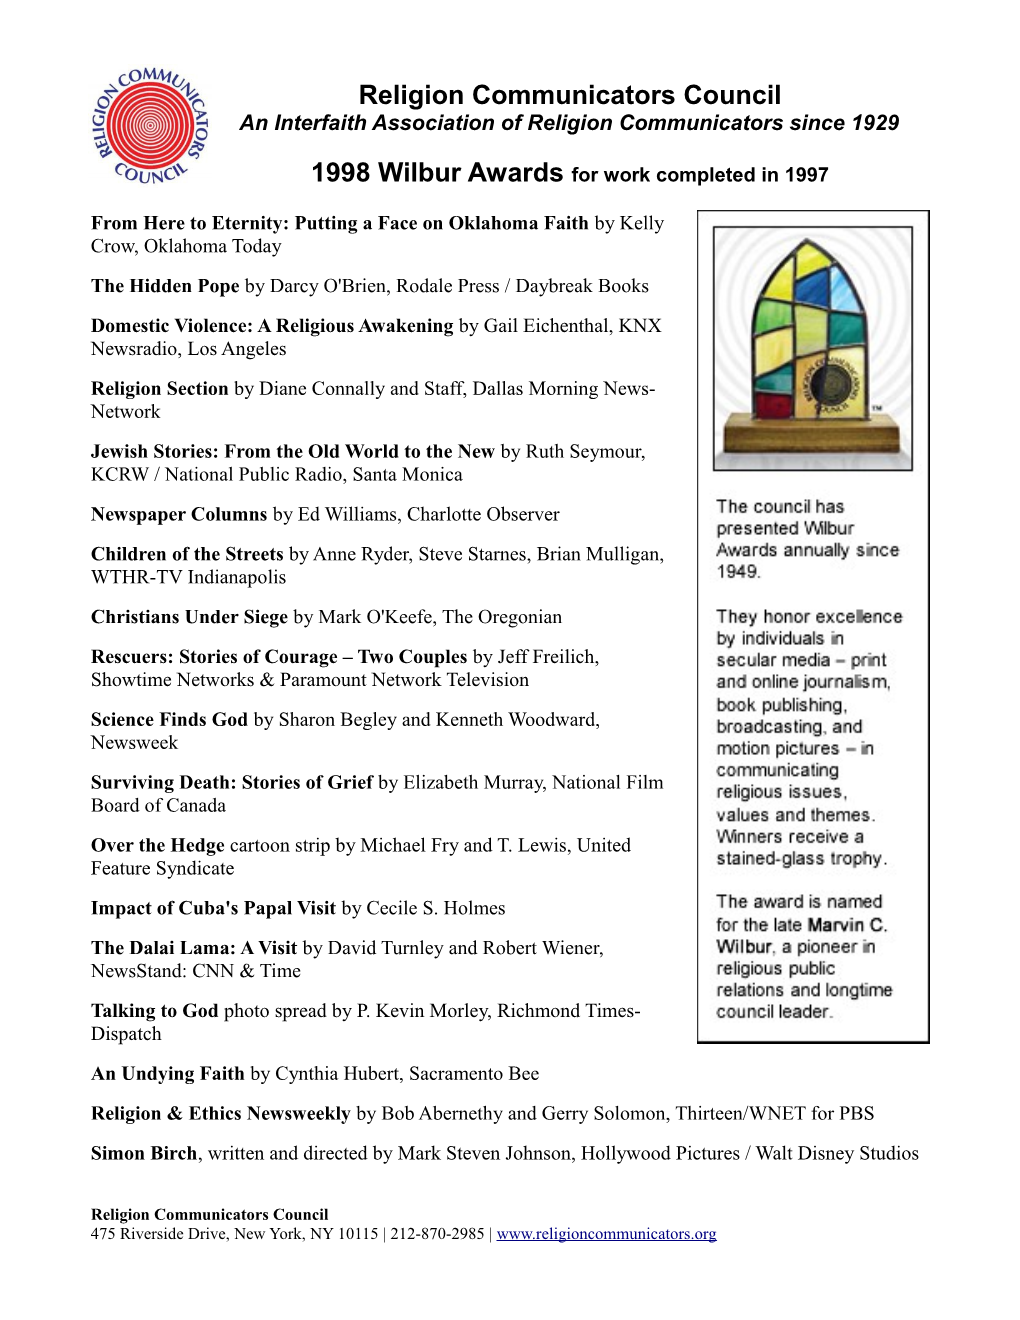 1998 Wilbur Award Winners